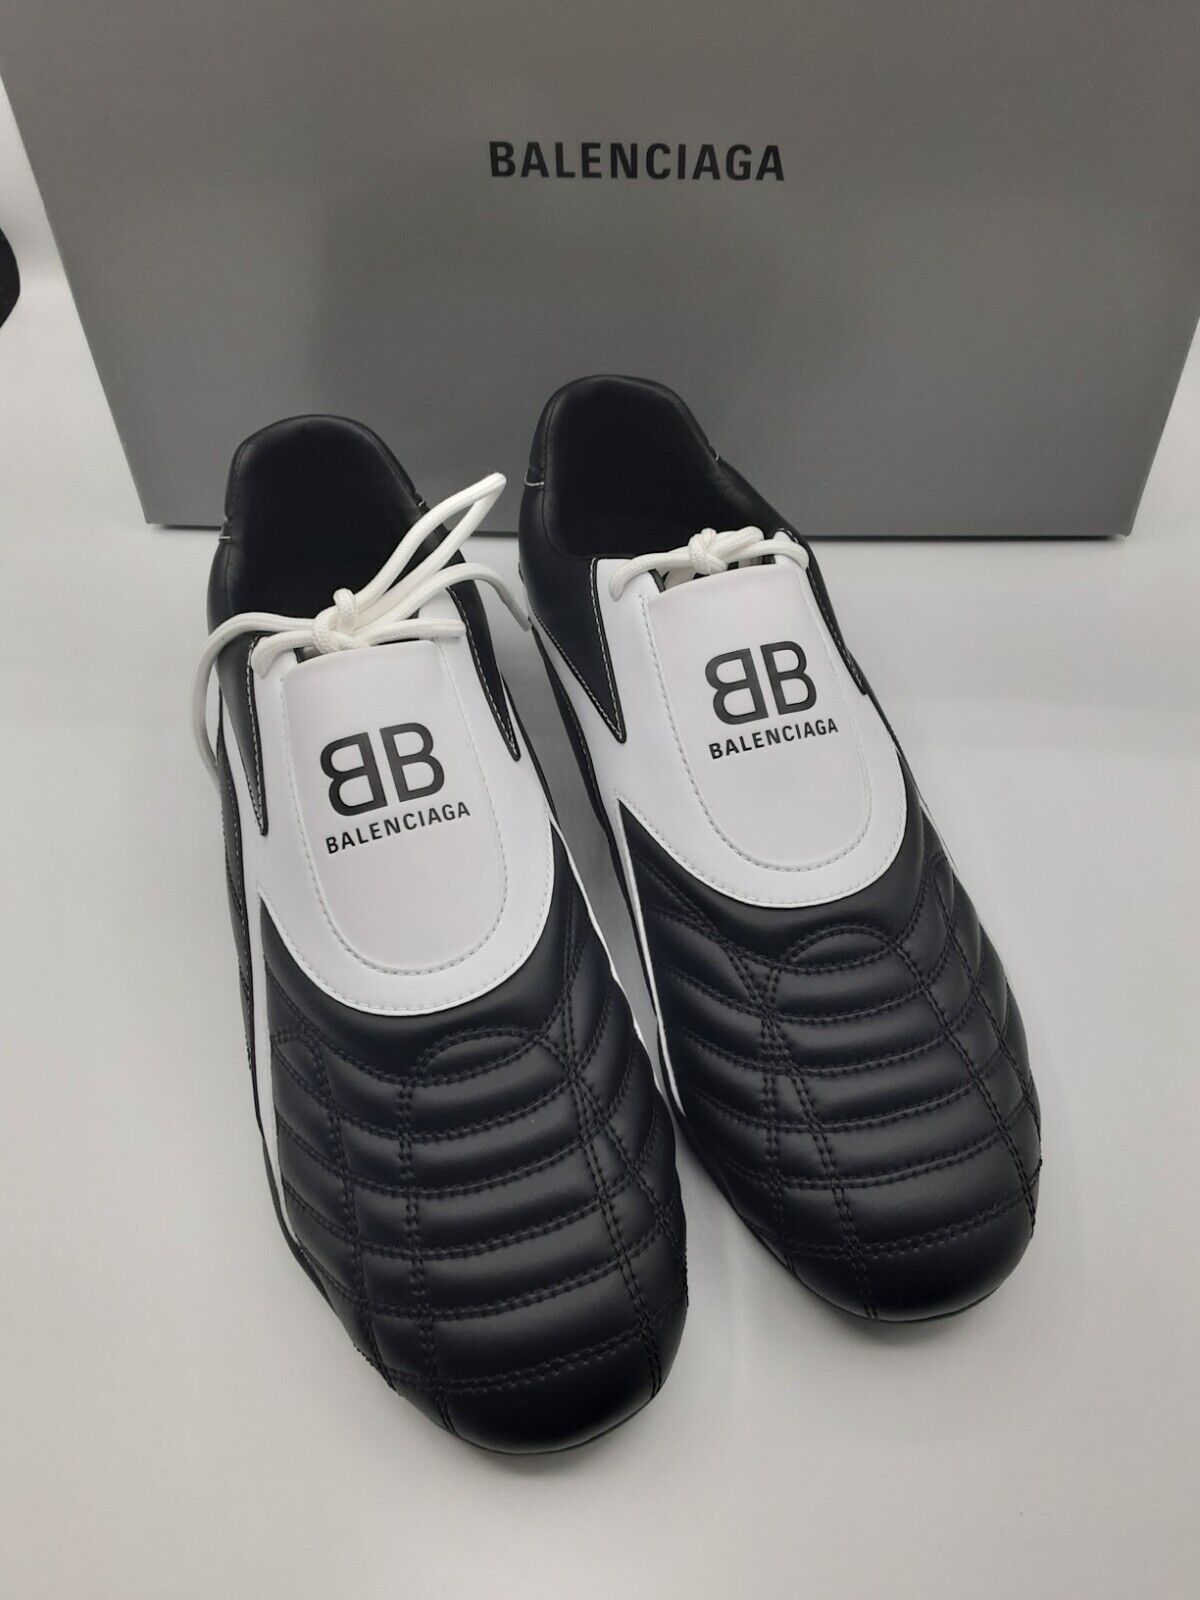 Balenciaga Zen logo print men\'s sneakers black/white EU 44 US 11 $650